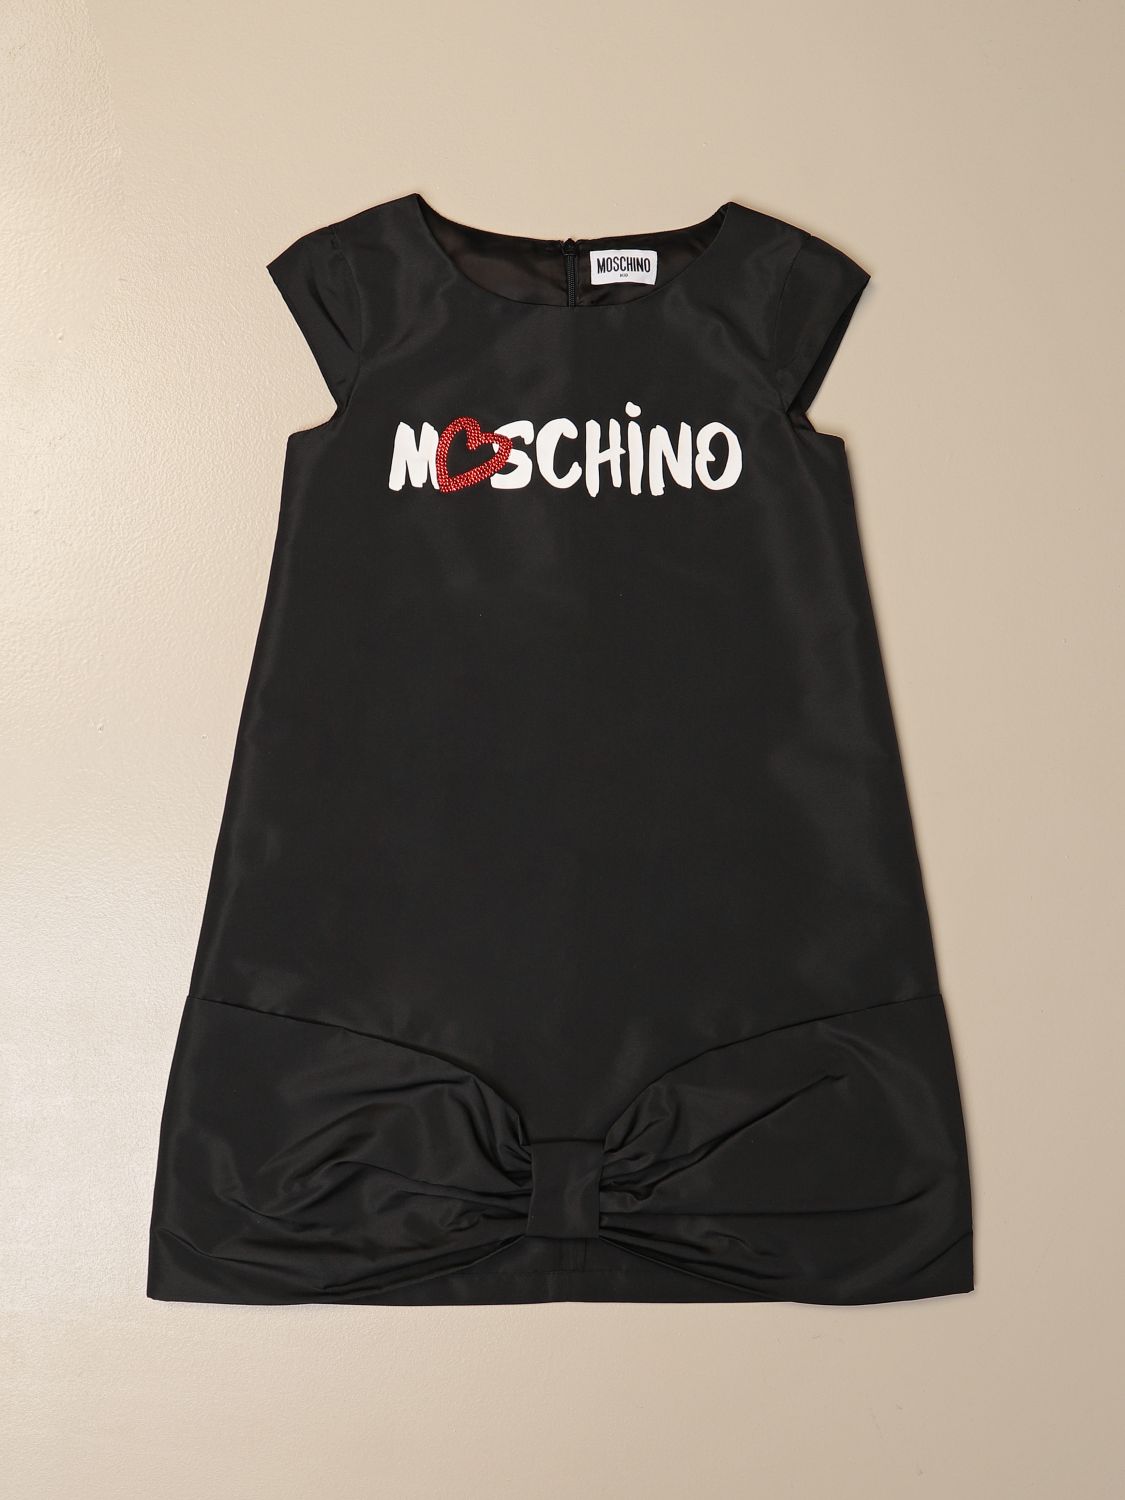 moschino kids wear